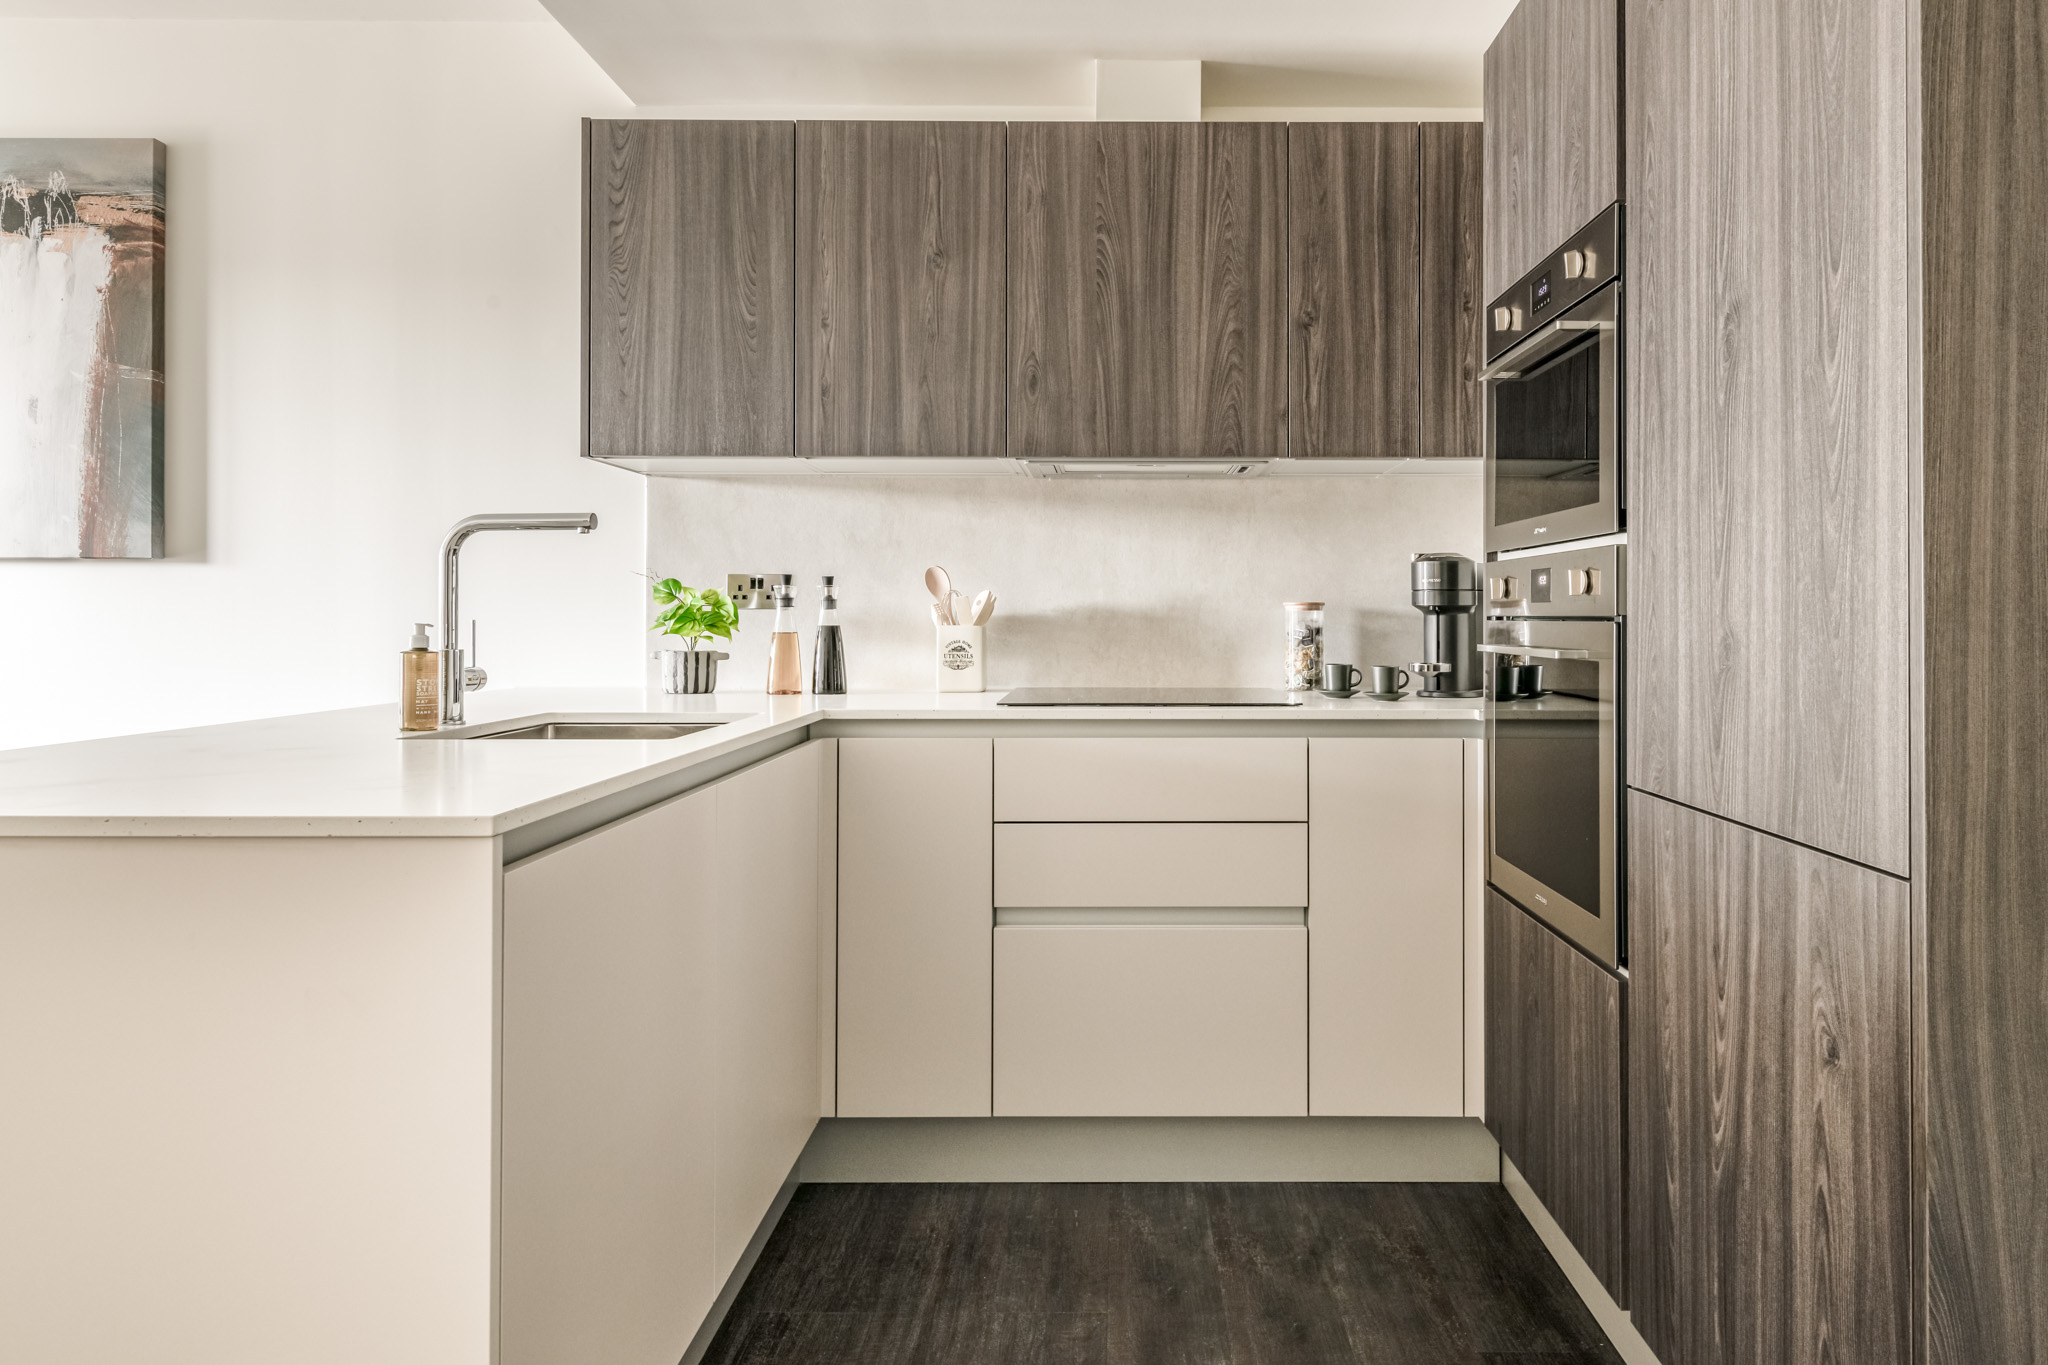 Kitchen - Two Bedroom Apartment - Urban rest Battersea Apartments - London - Urban Rest